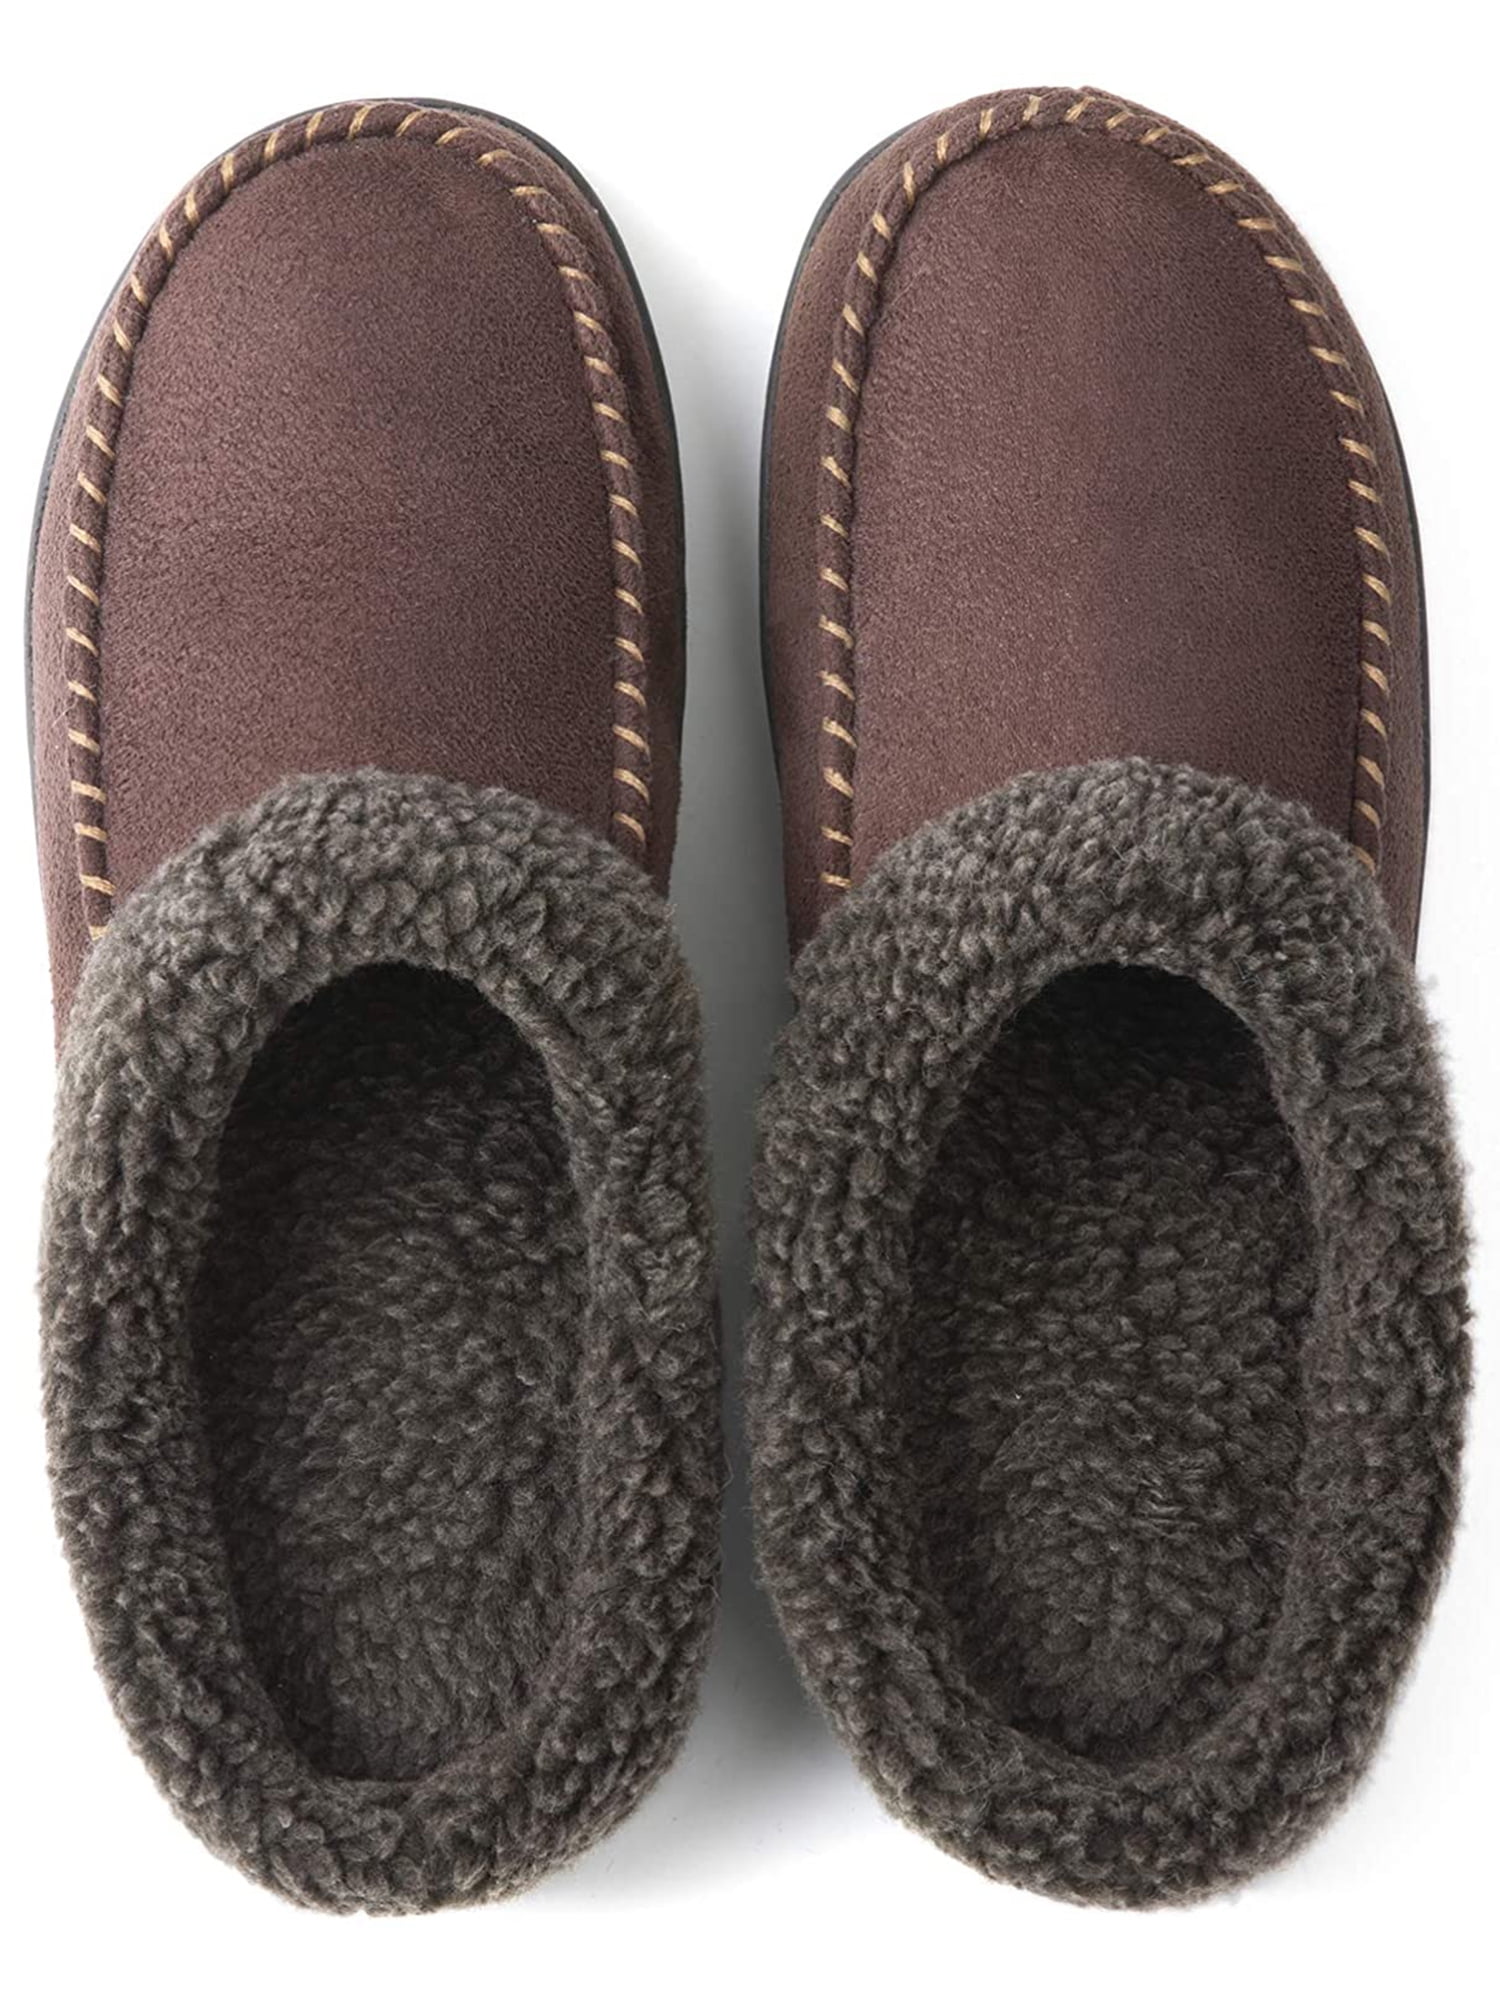 NDB Women's Cozy Memory Foam Suede Slippers Fuzzy Wool-Like Plush Fleece Lined Slip On Indoor Outdoor House Shoes